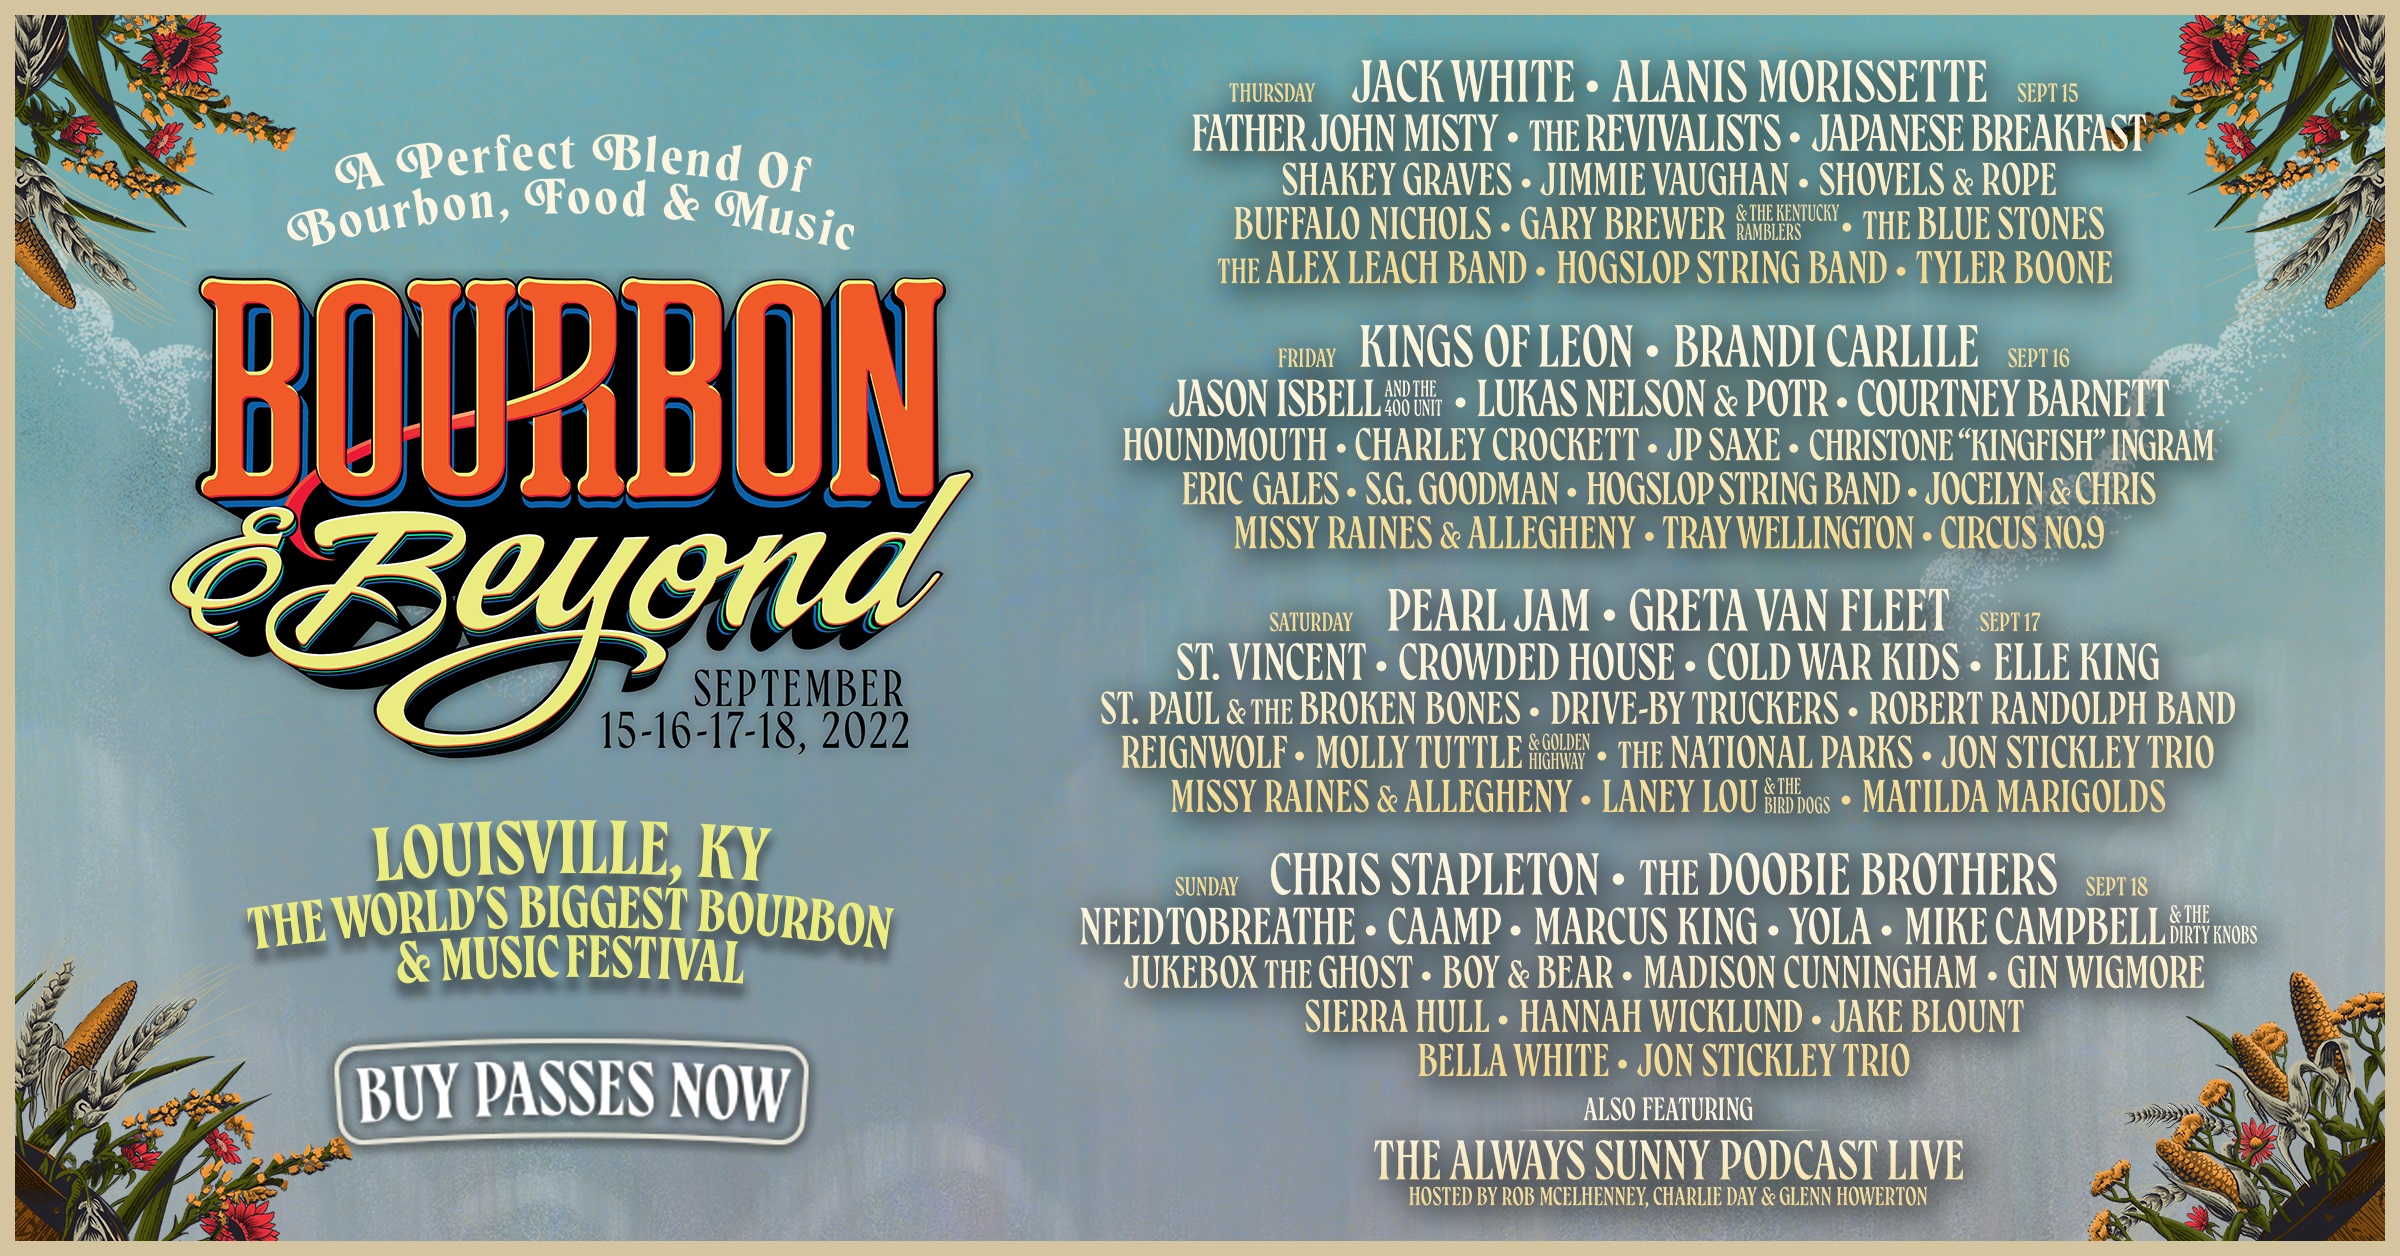 Bourbon & Beyond 2022: Full BGS Bluegrass Stage Lineup Announced